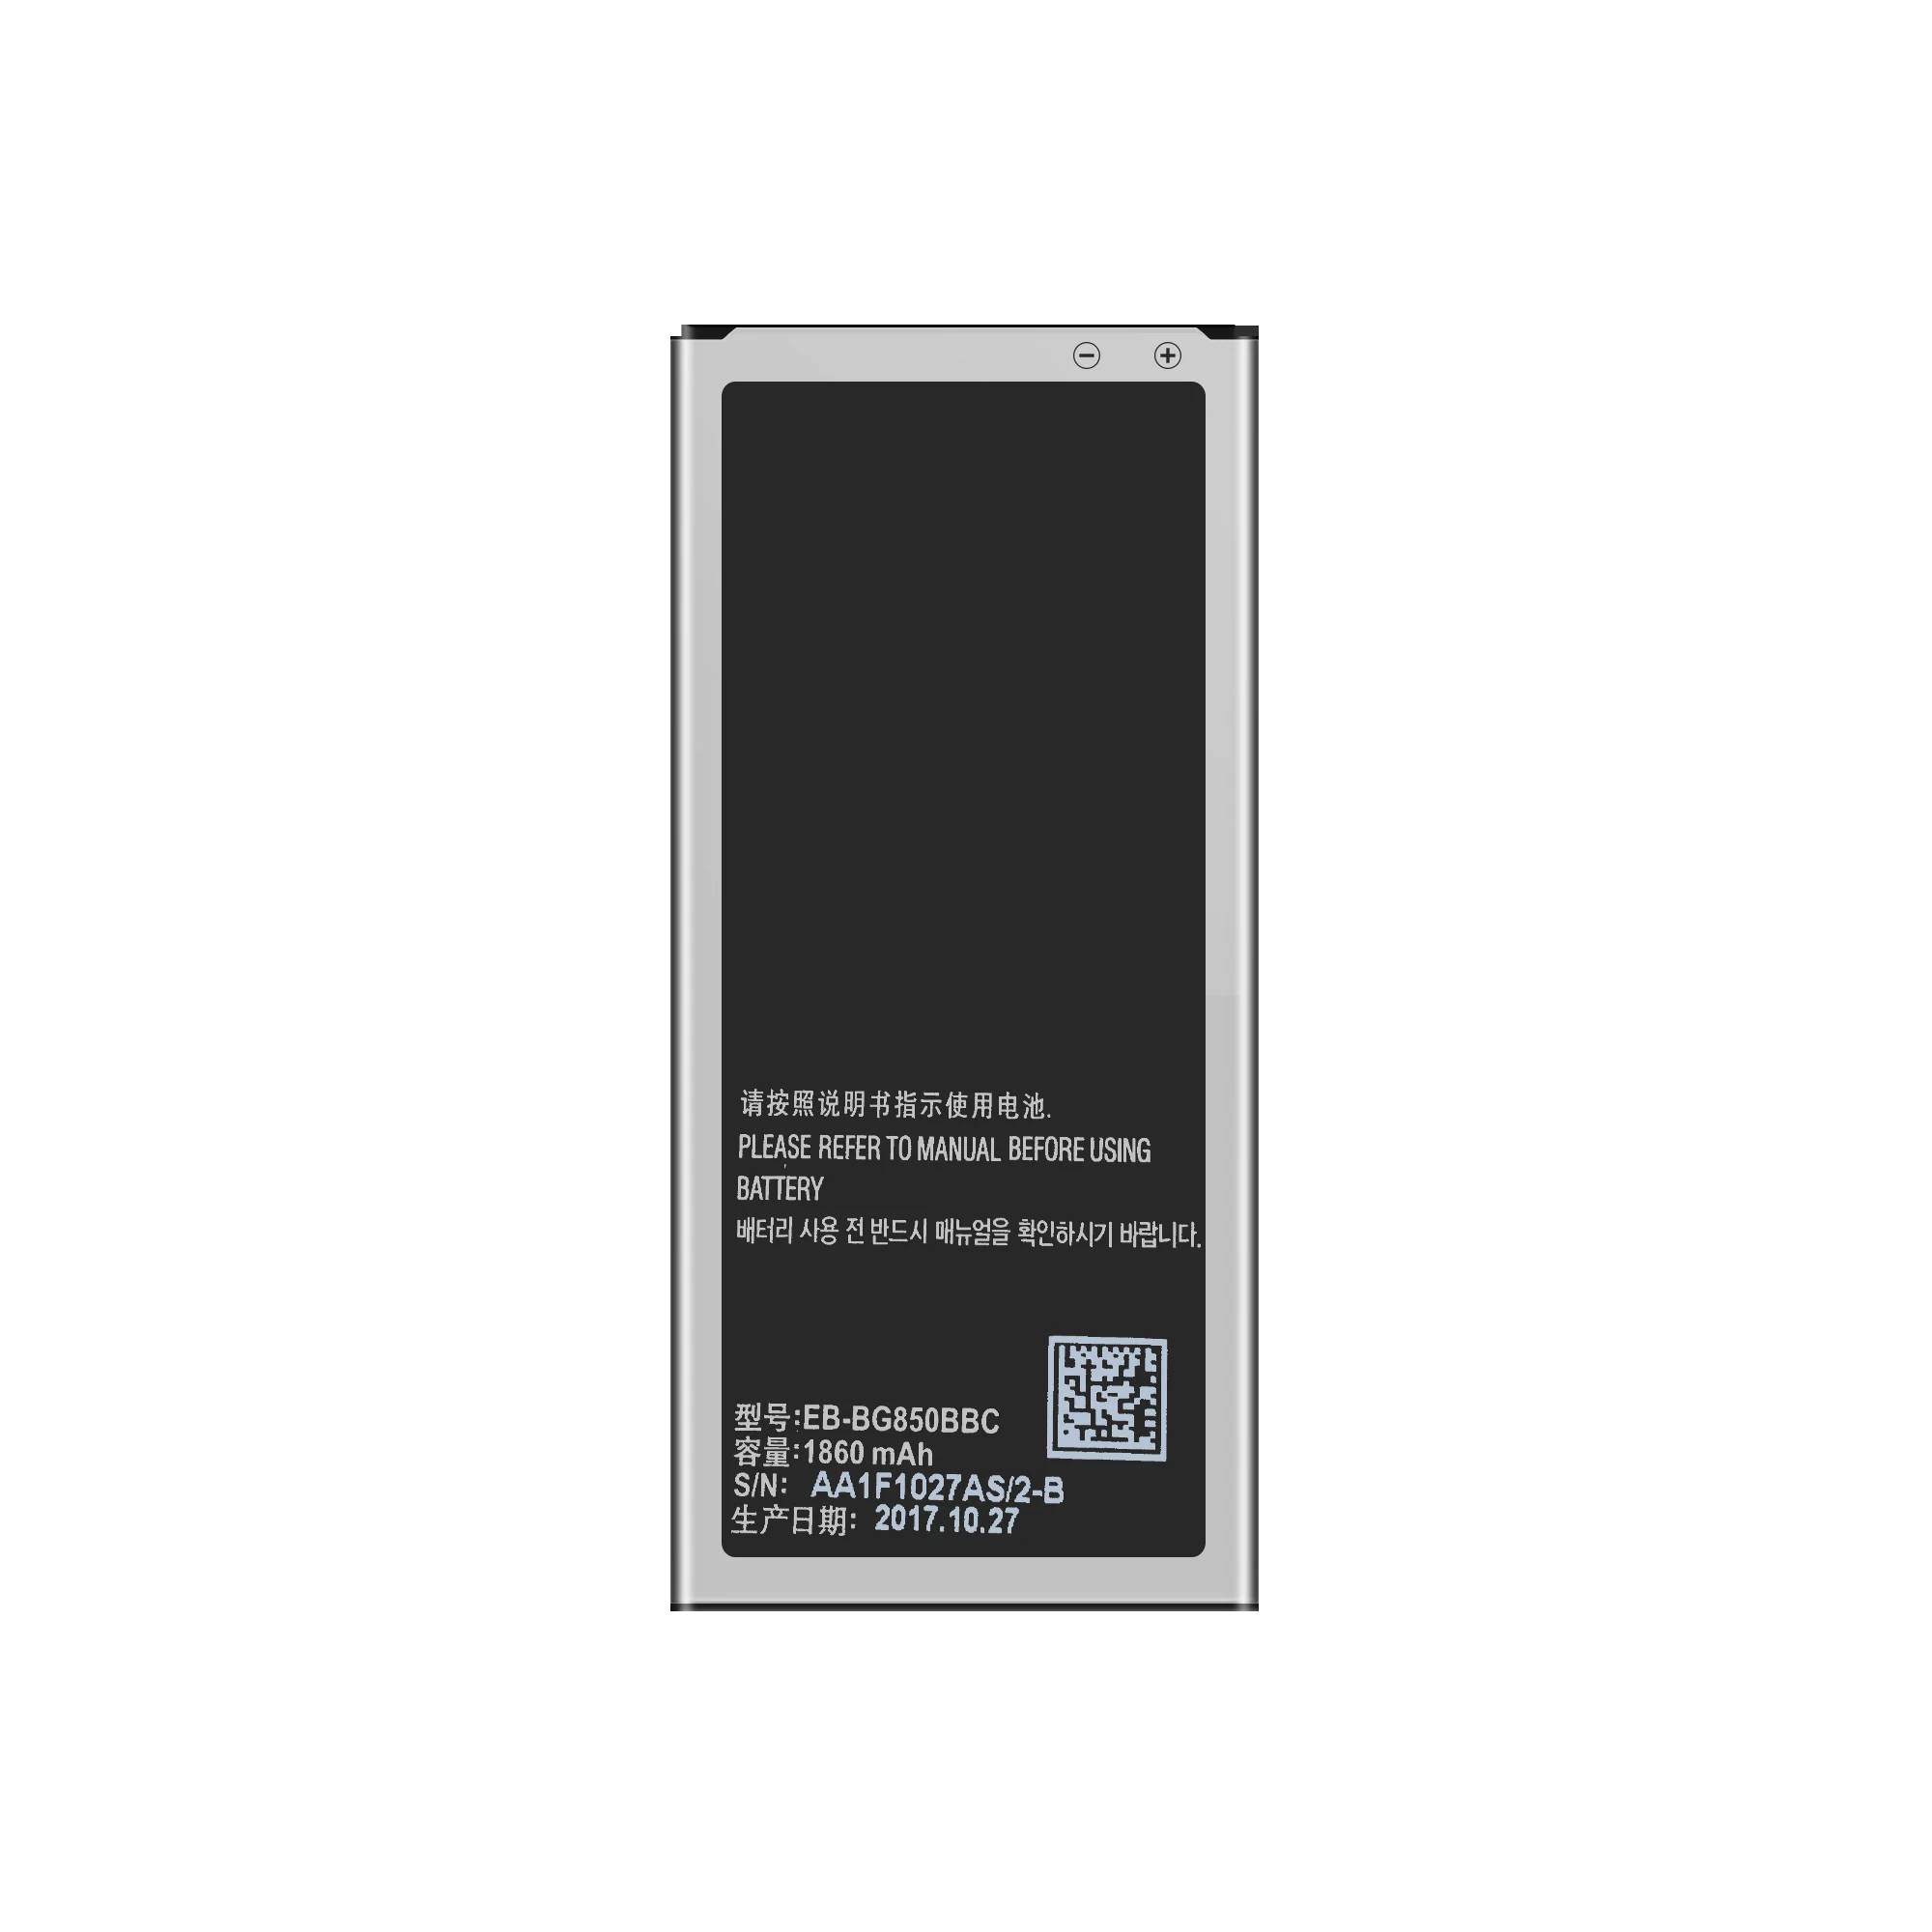 

EB-BG850BBC Standard cell phone battery for Samsung galaxy Alpha G8508 G850F G8509V S801 G850V mobile phone battery